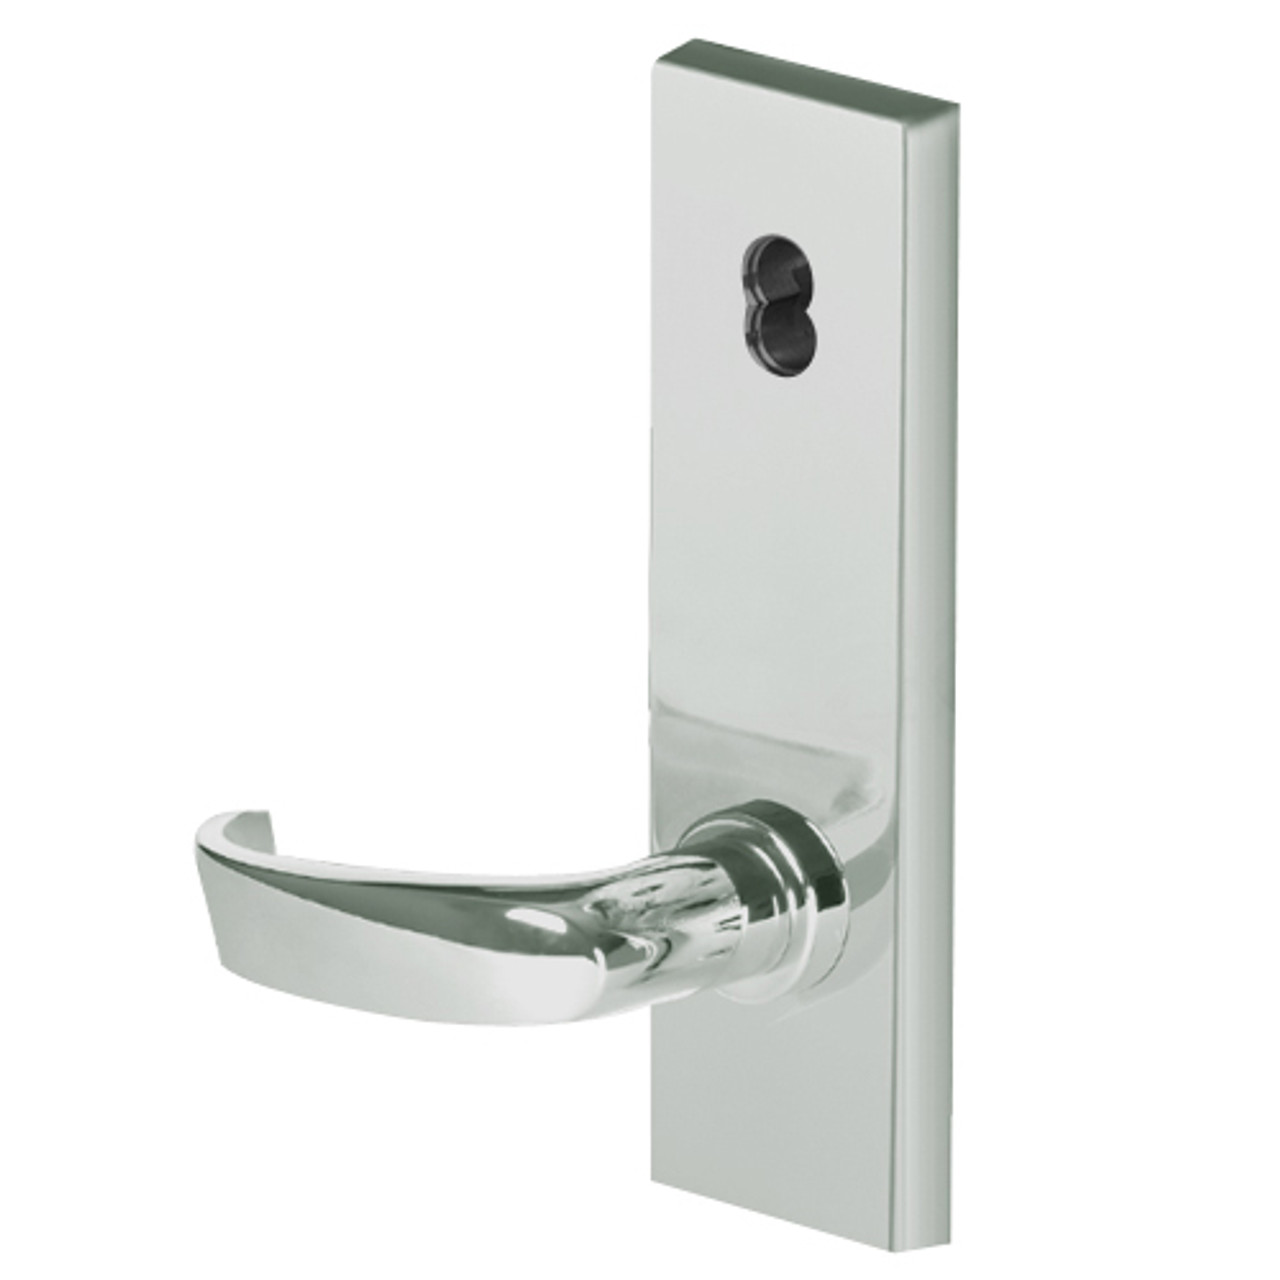 45HW7DEU14N619 Best 40HW series Single Key Latch Fail Secure Electromechanical Mortise Lever Lock with Curved w/ Return Style in Satin Nickel